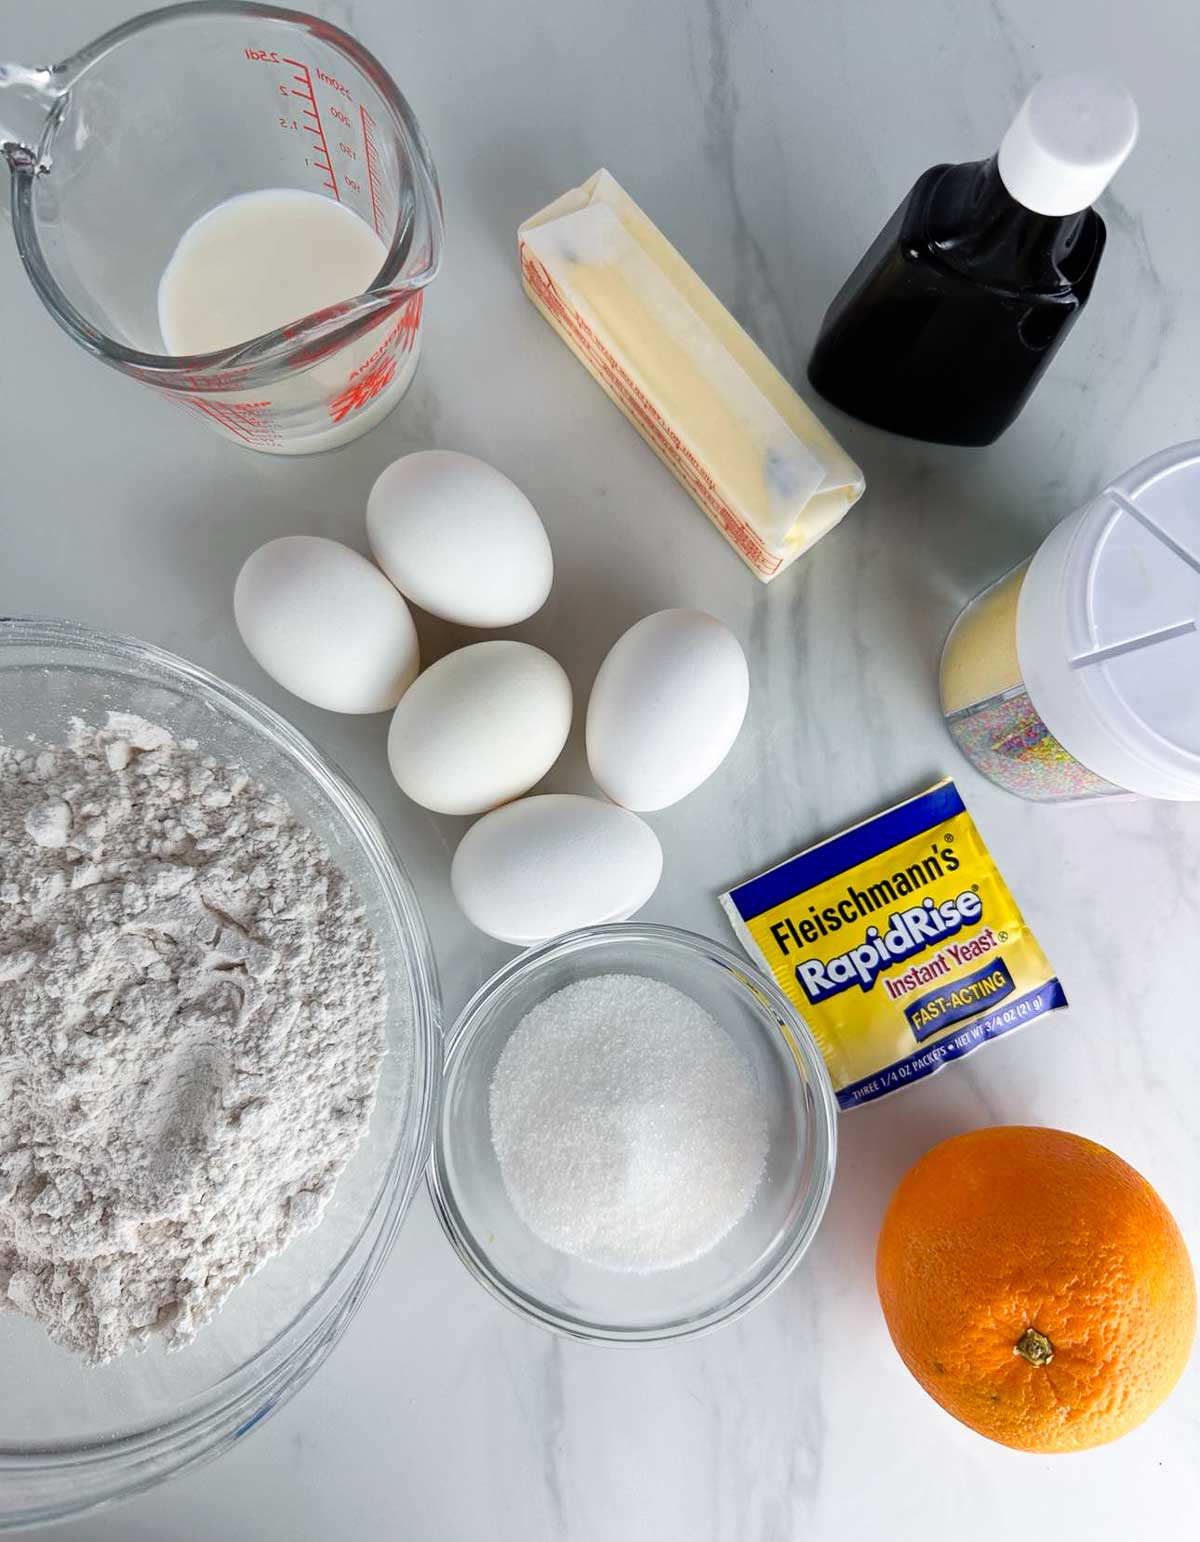 Italian Easter Bread Ingredients: Flour, Milk, Salt, Eggs, Butter, Zest, Vanilla, and Sprinkles